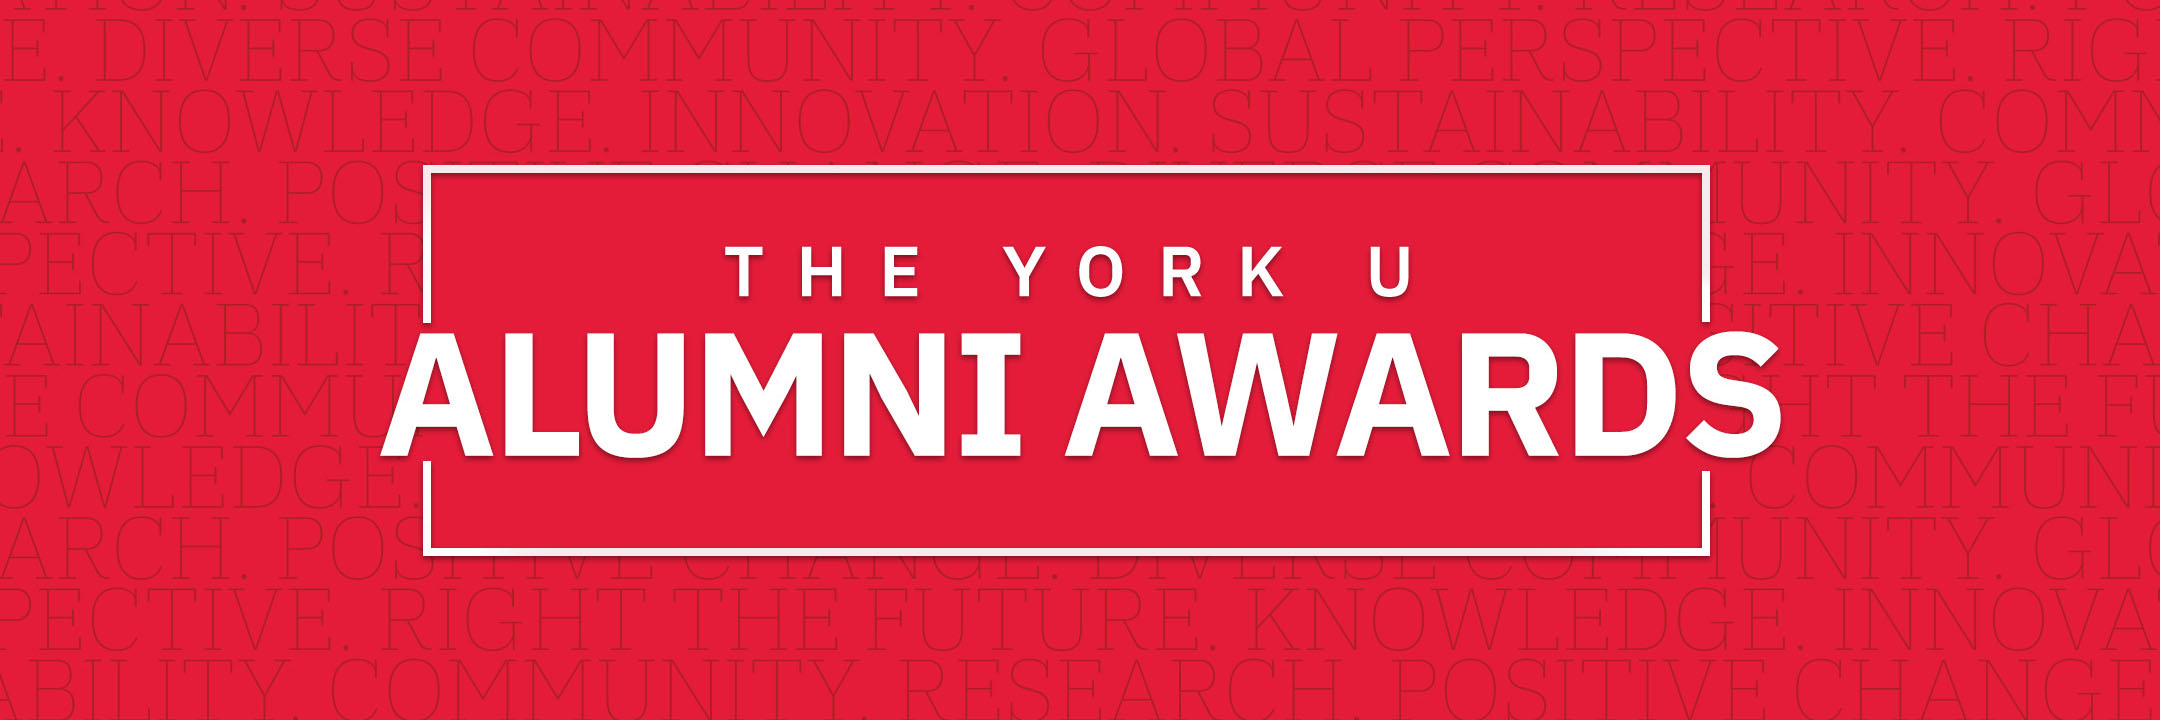 York University Alumni Awards banner